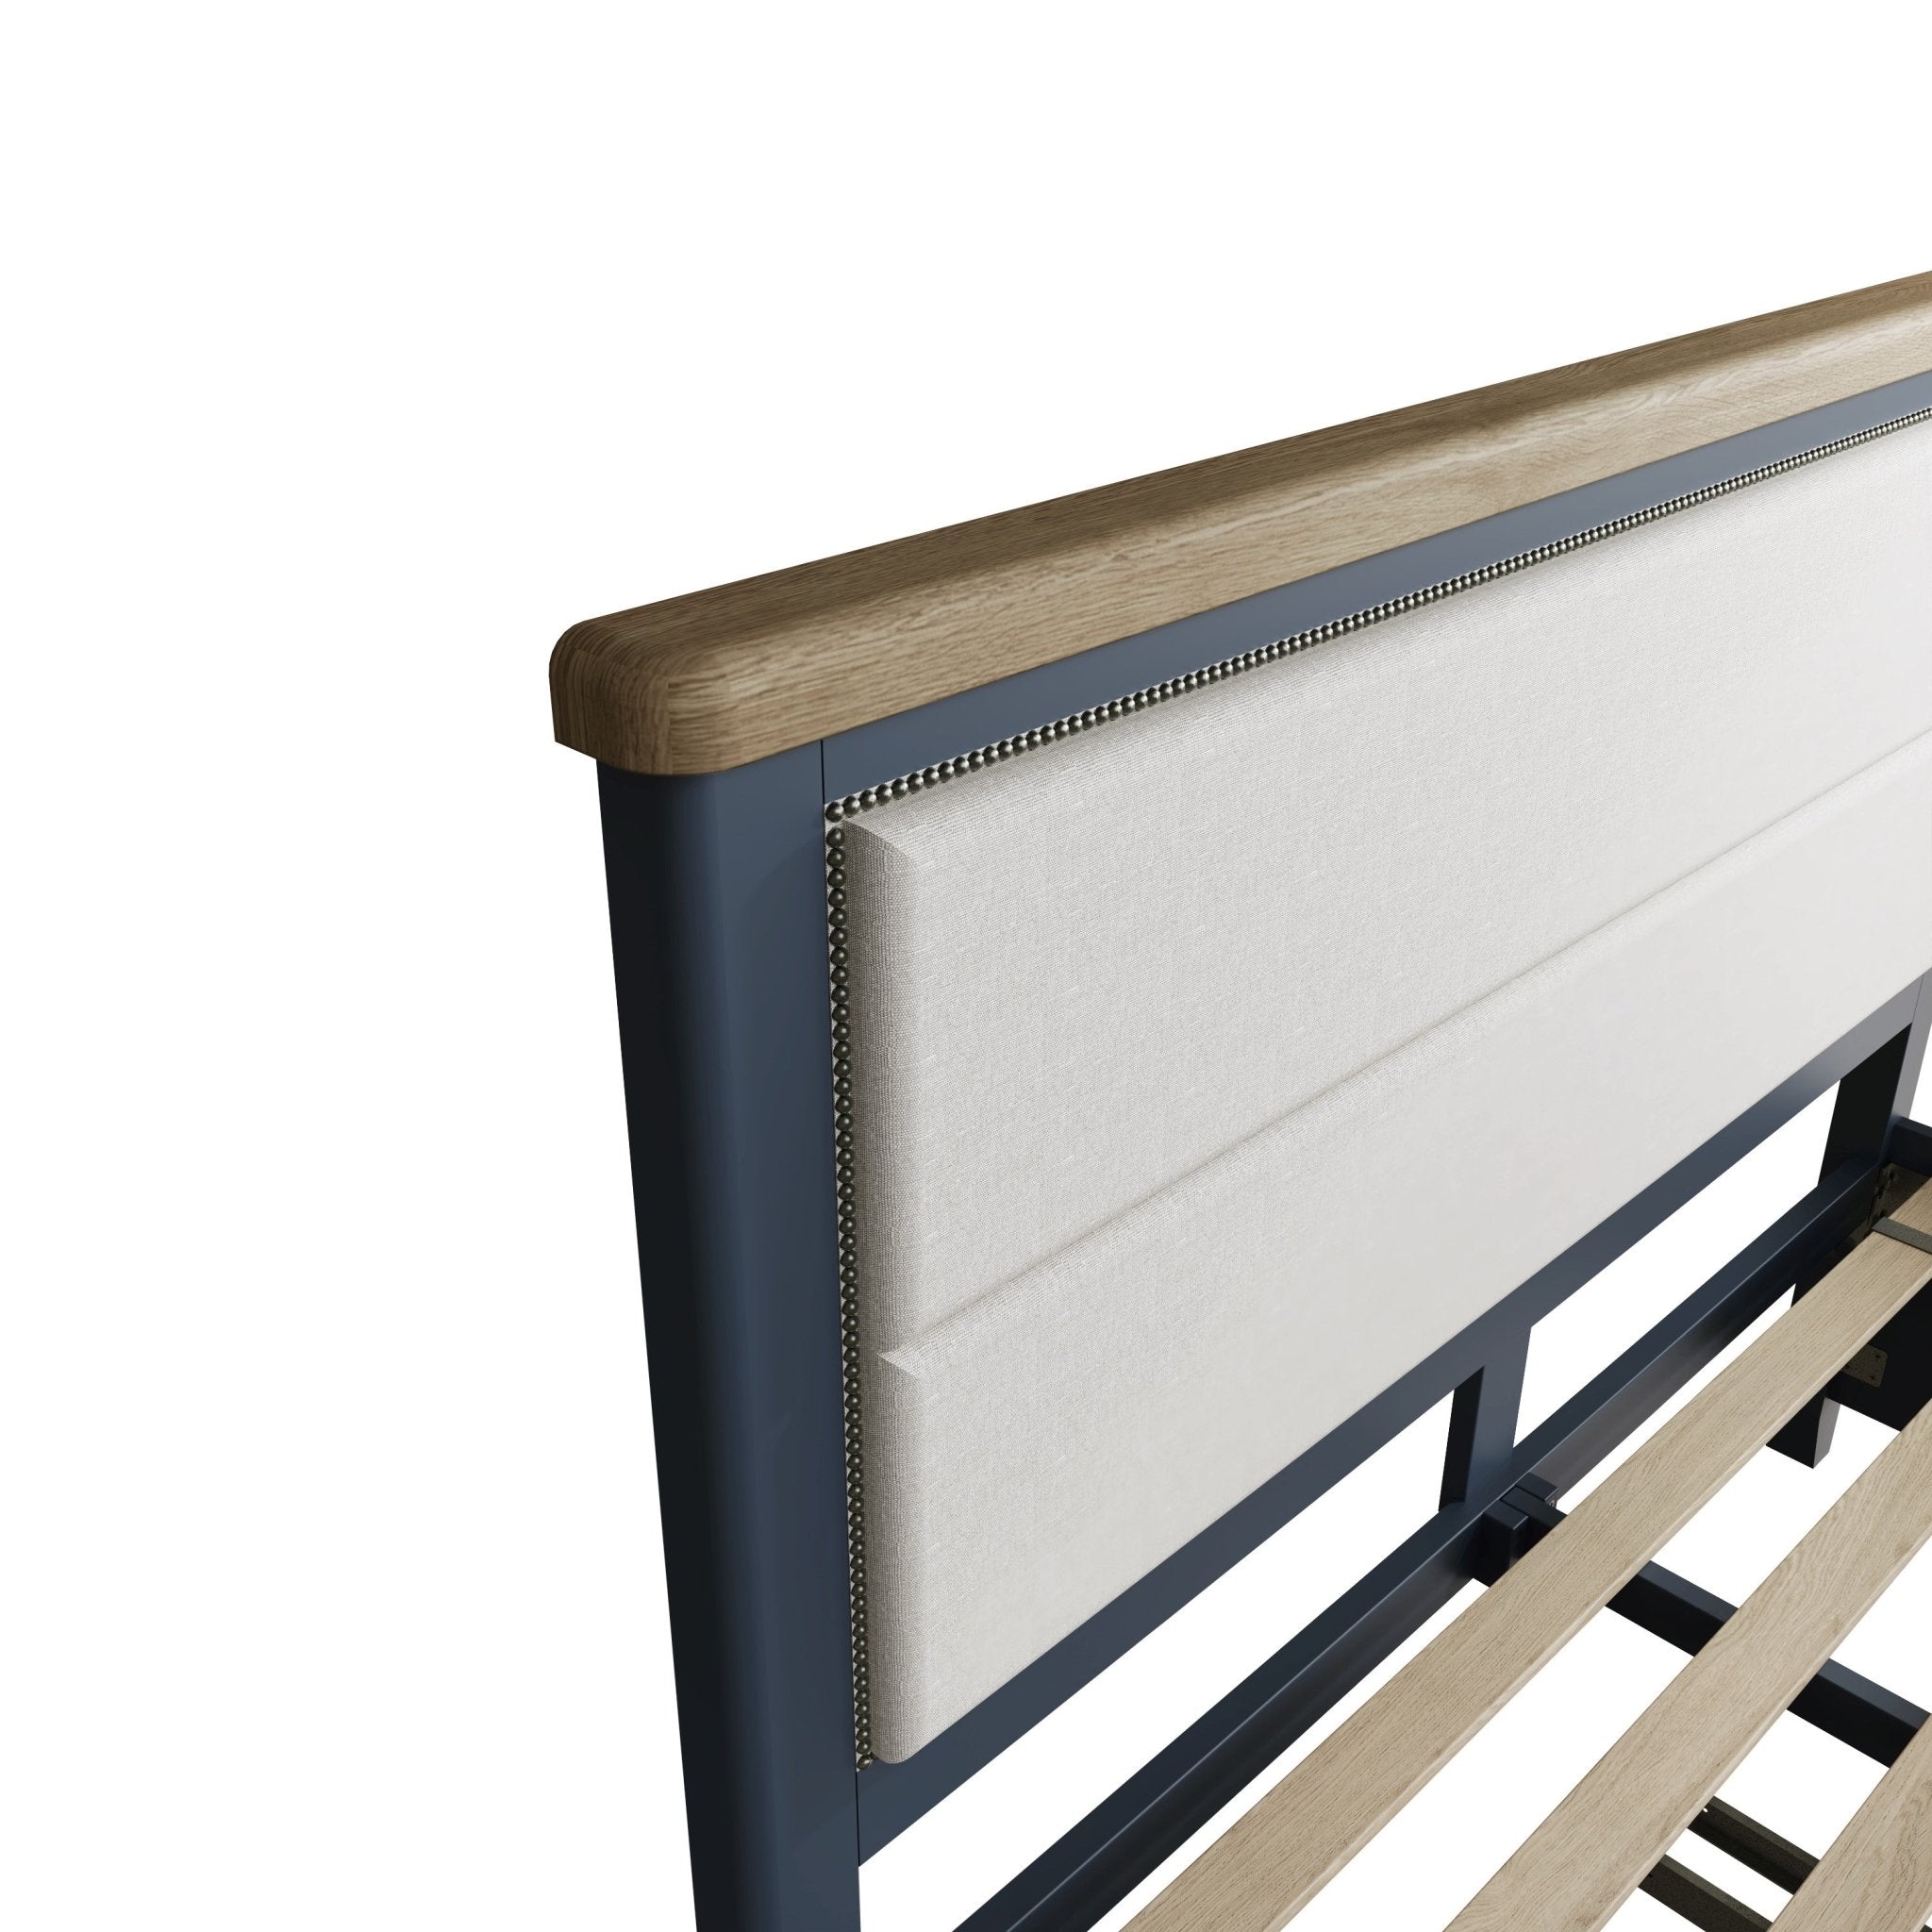 Rogate Blue 5'0 Kingsize Bed Frame - Fabric Headboard & Drawers - Duck Barn Interiors